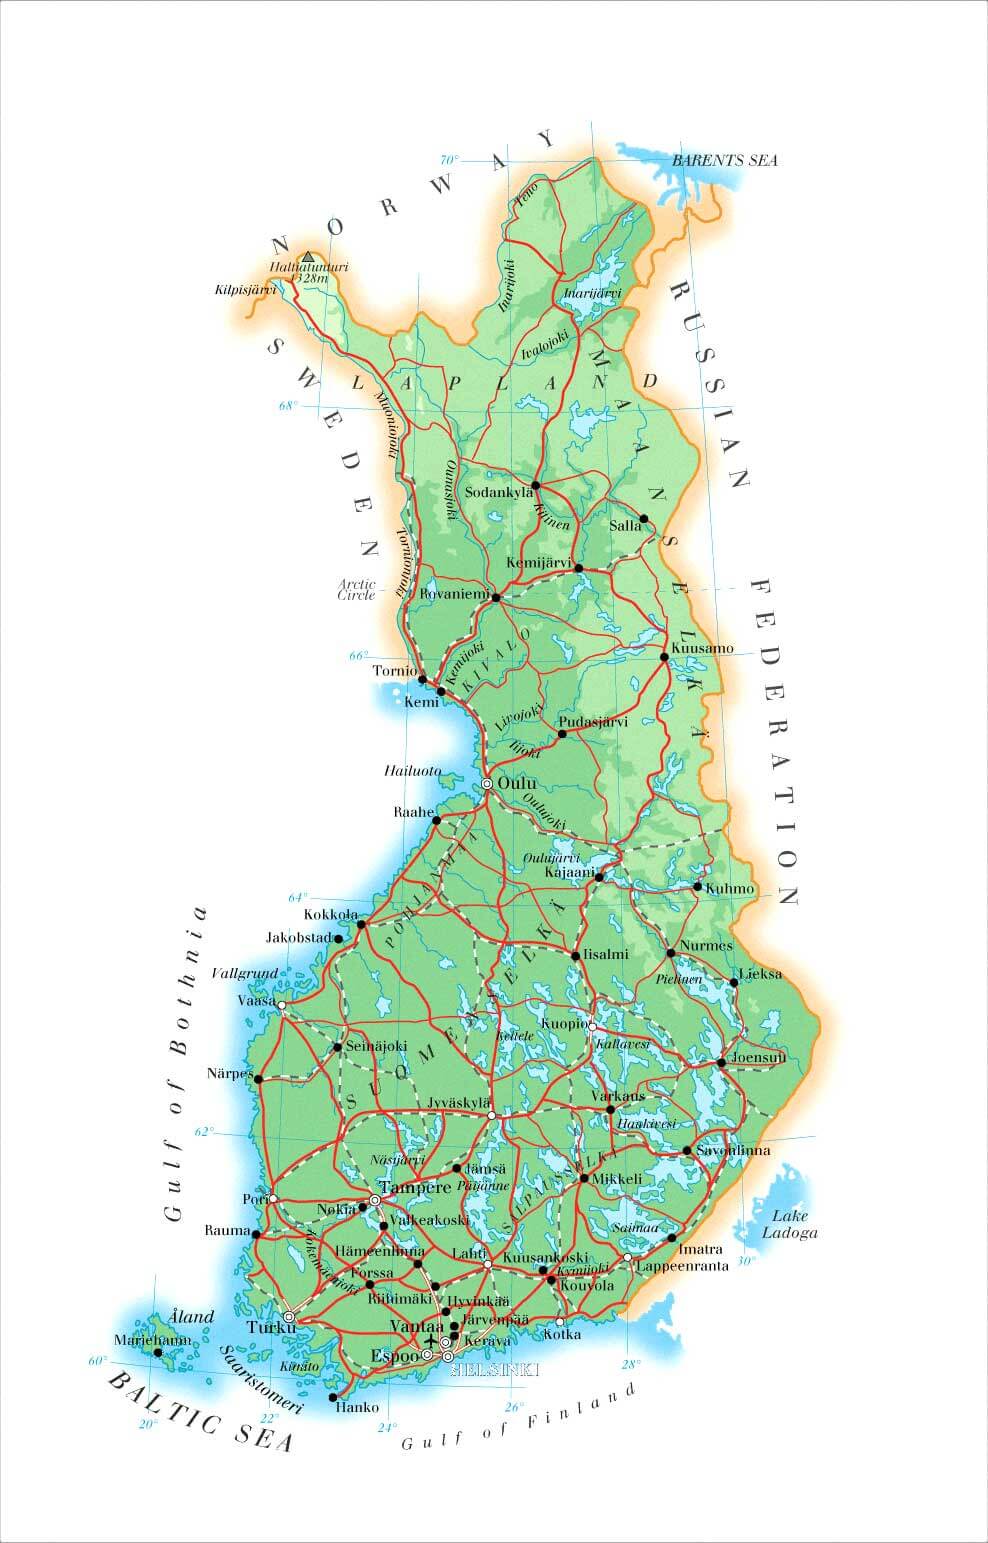 Map Finland